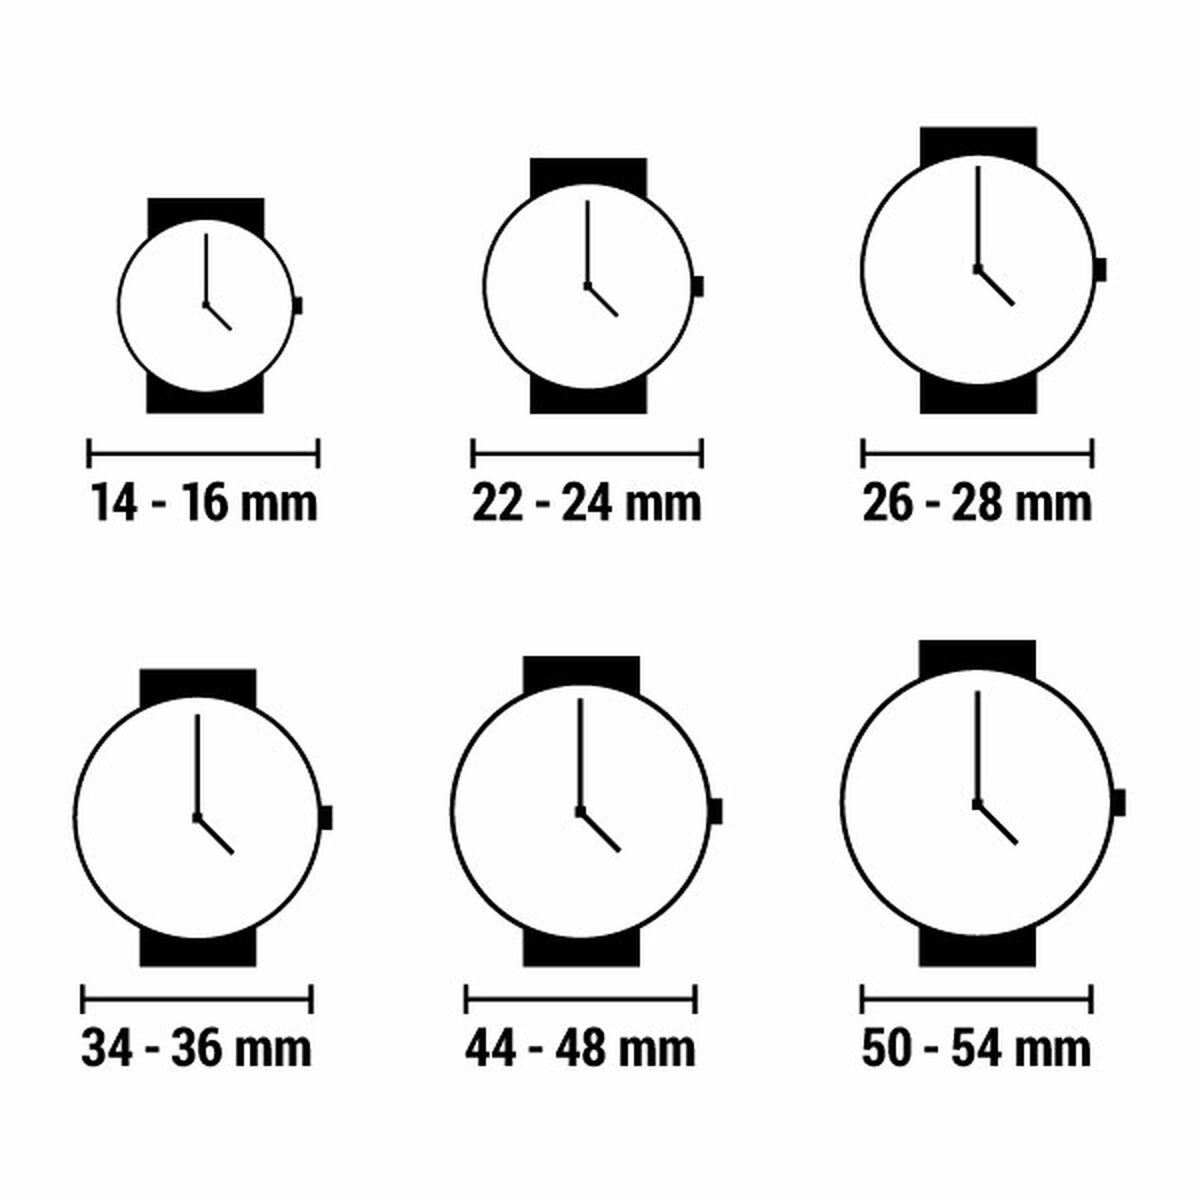 Unisex Watch Radiant RA563201 (Ø 45 mm)